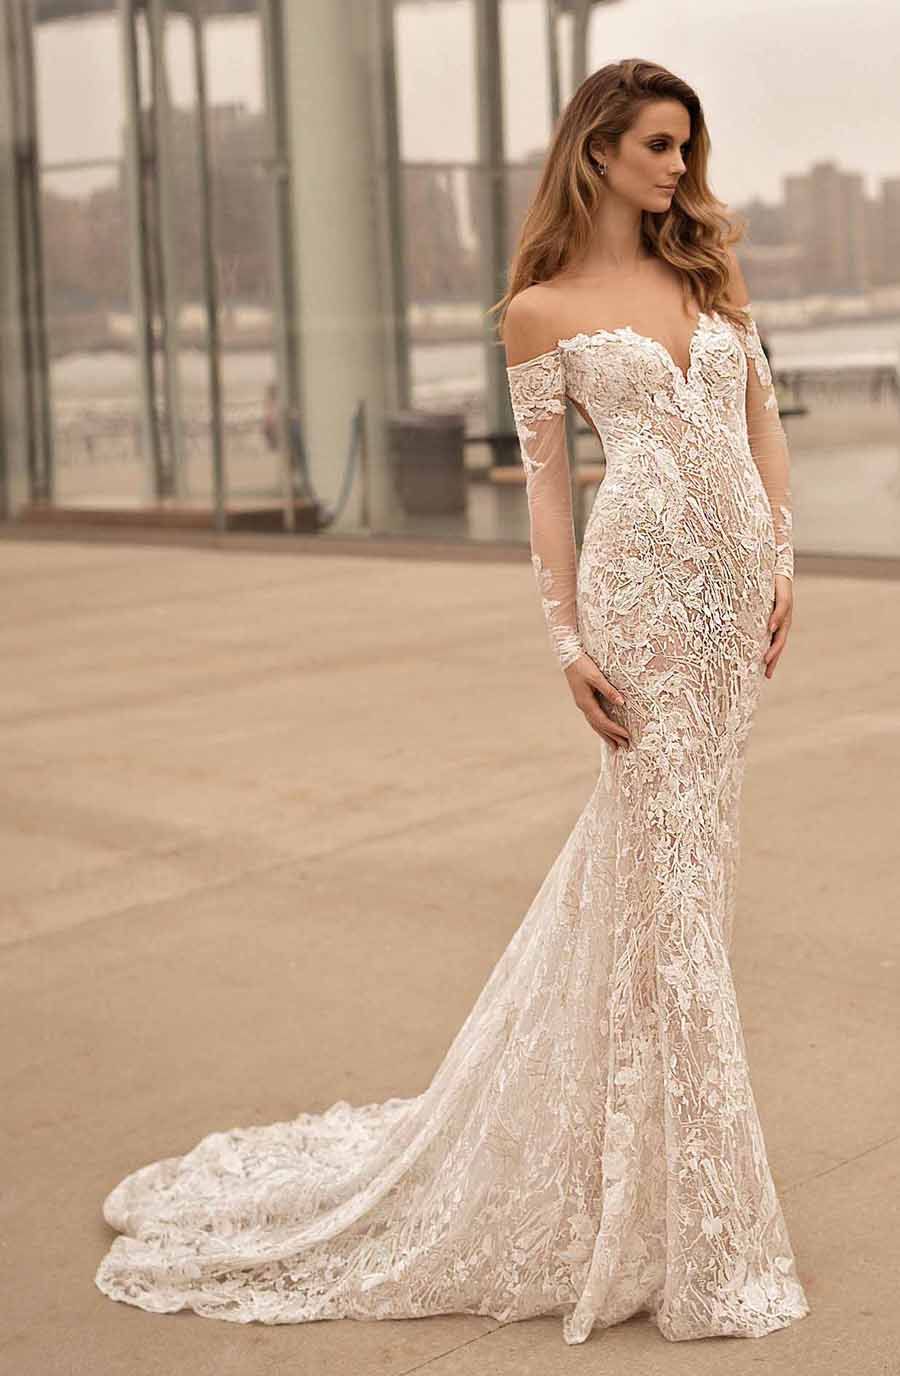 Long Sleeves Off The Shoulder Wedding Dresses 2018 Berta Bridal ...